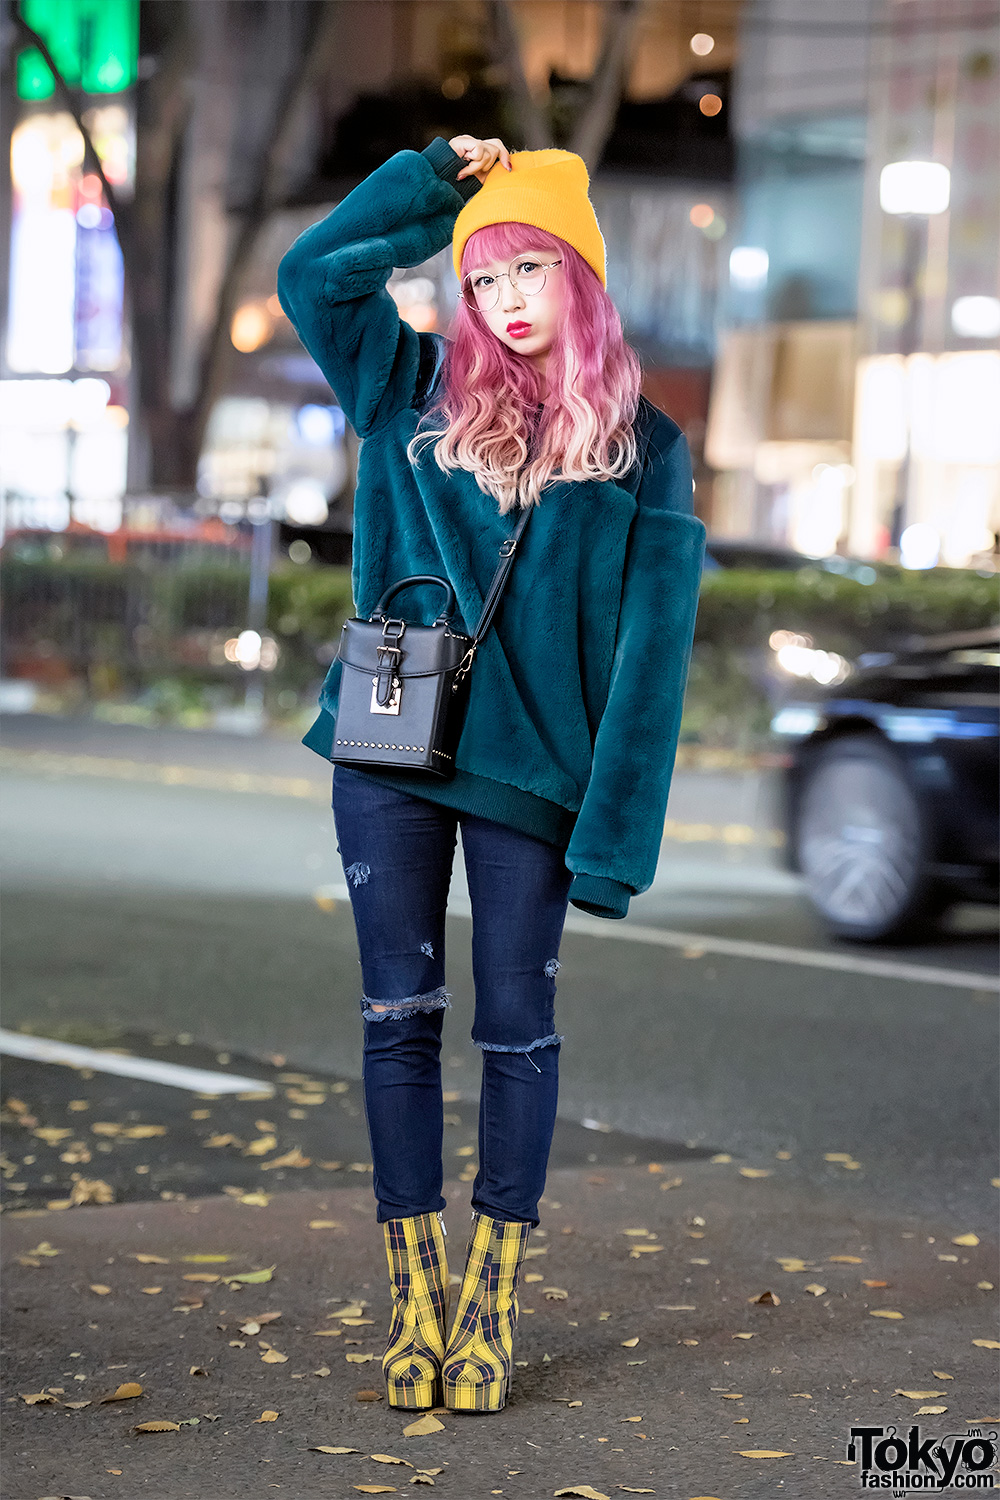 Hikapu in Harajuku w/ Pink Hair, Aqua Sweater, Skinny Jeans & Plaid Platform Heels